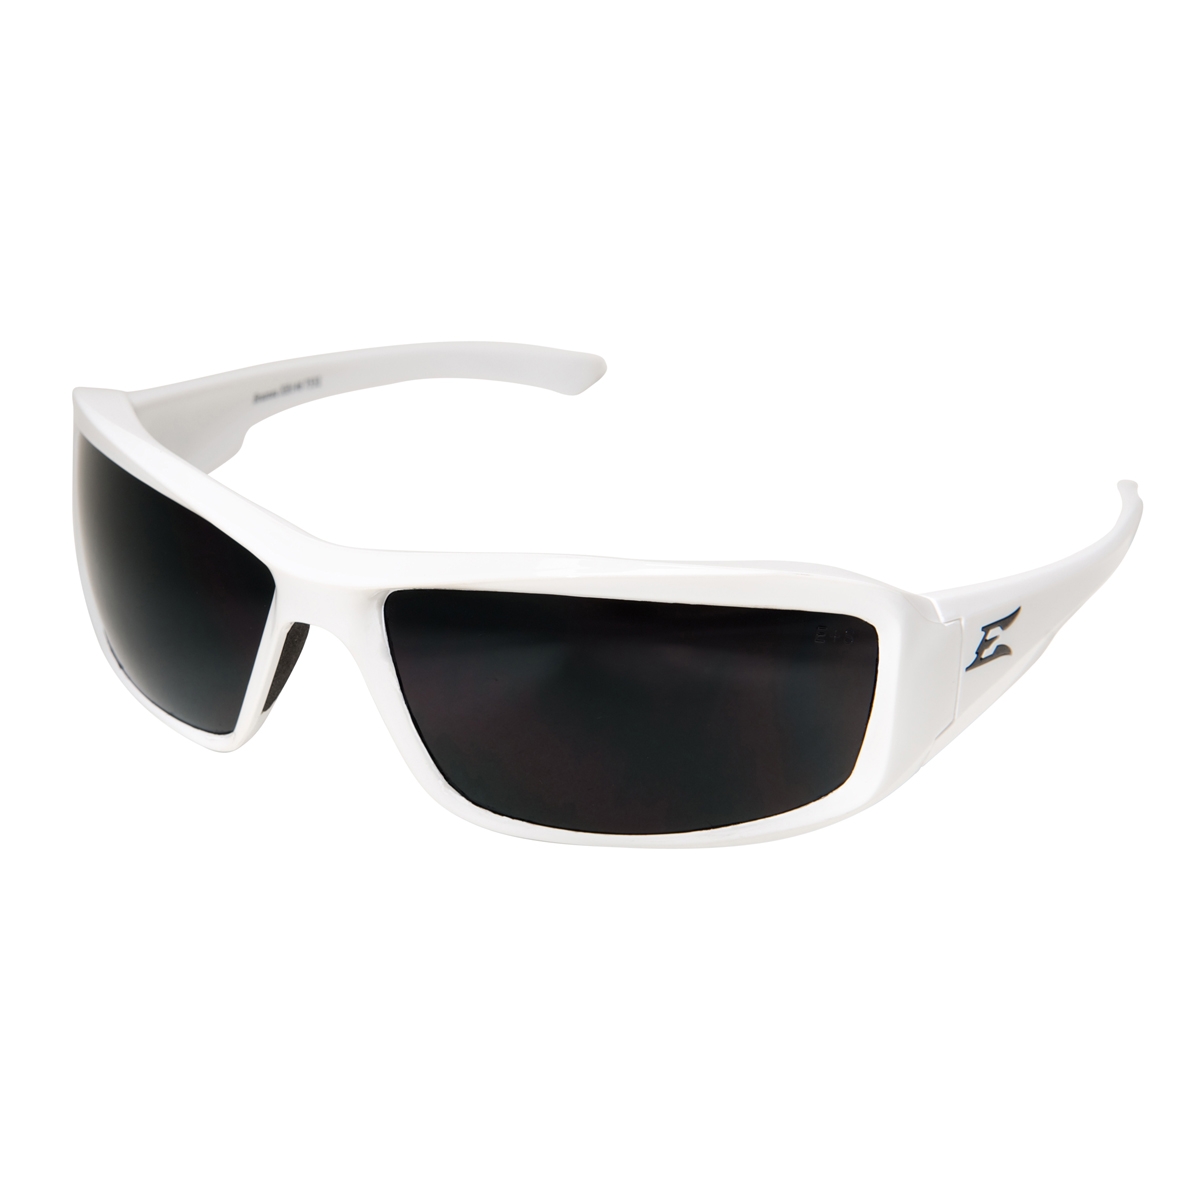 Smoke Lens Black Frame Edge Eyewear HZ116 Caraz Safety Glasses 